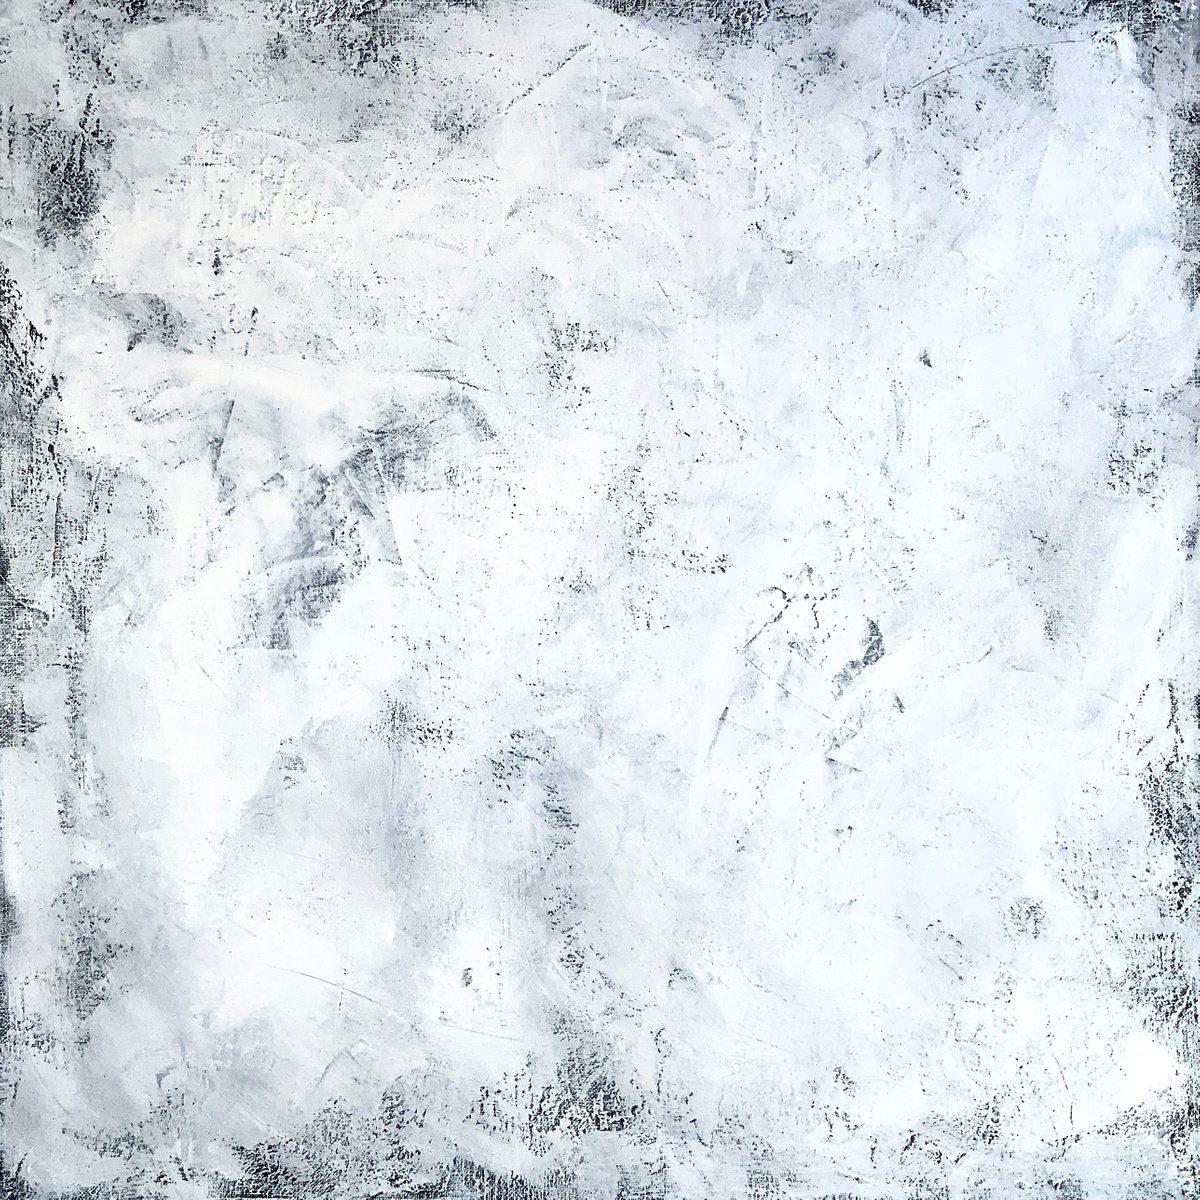 Abstraction No. 1821 white monochrome minimalism by Anita Kaufmann